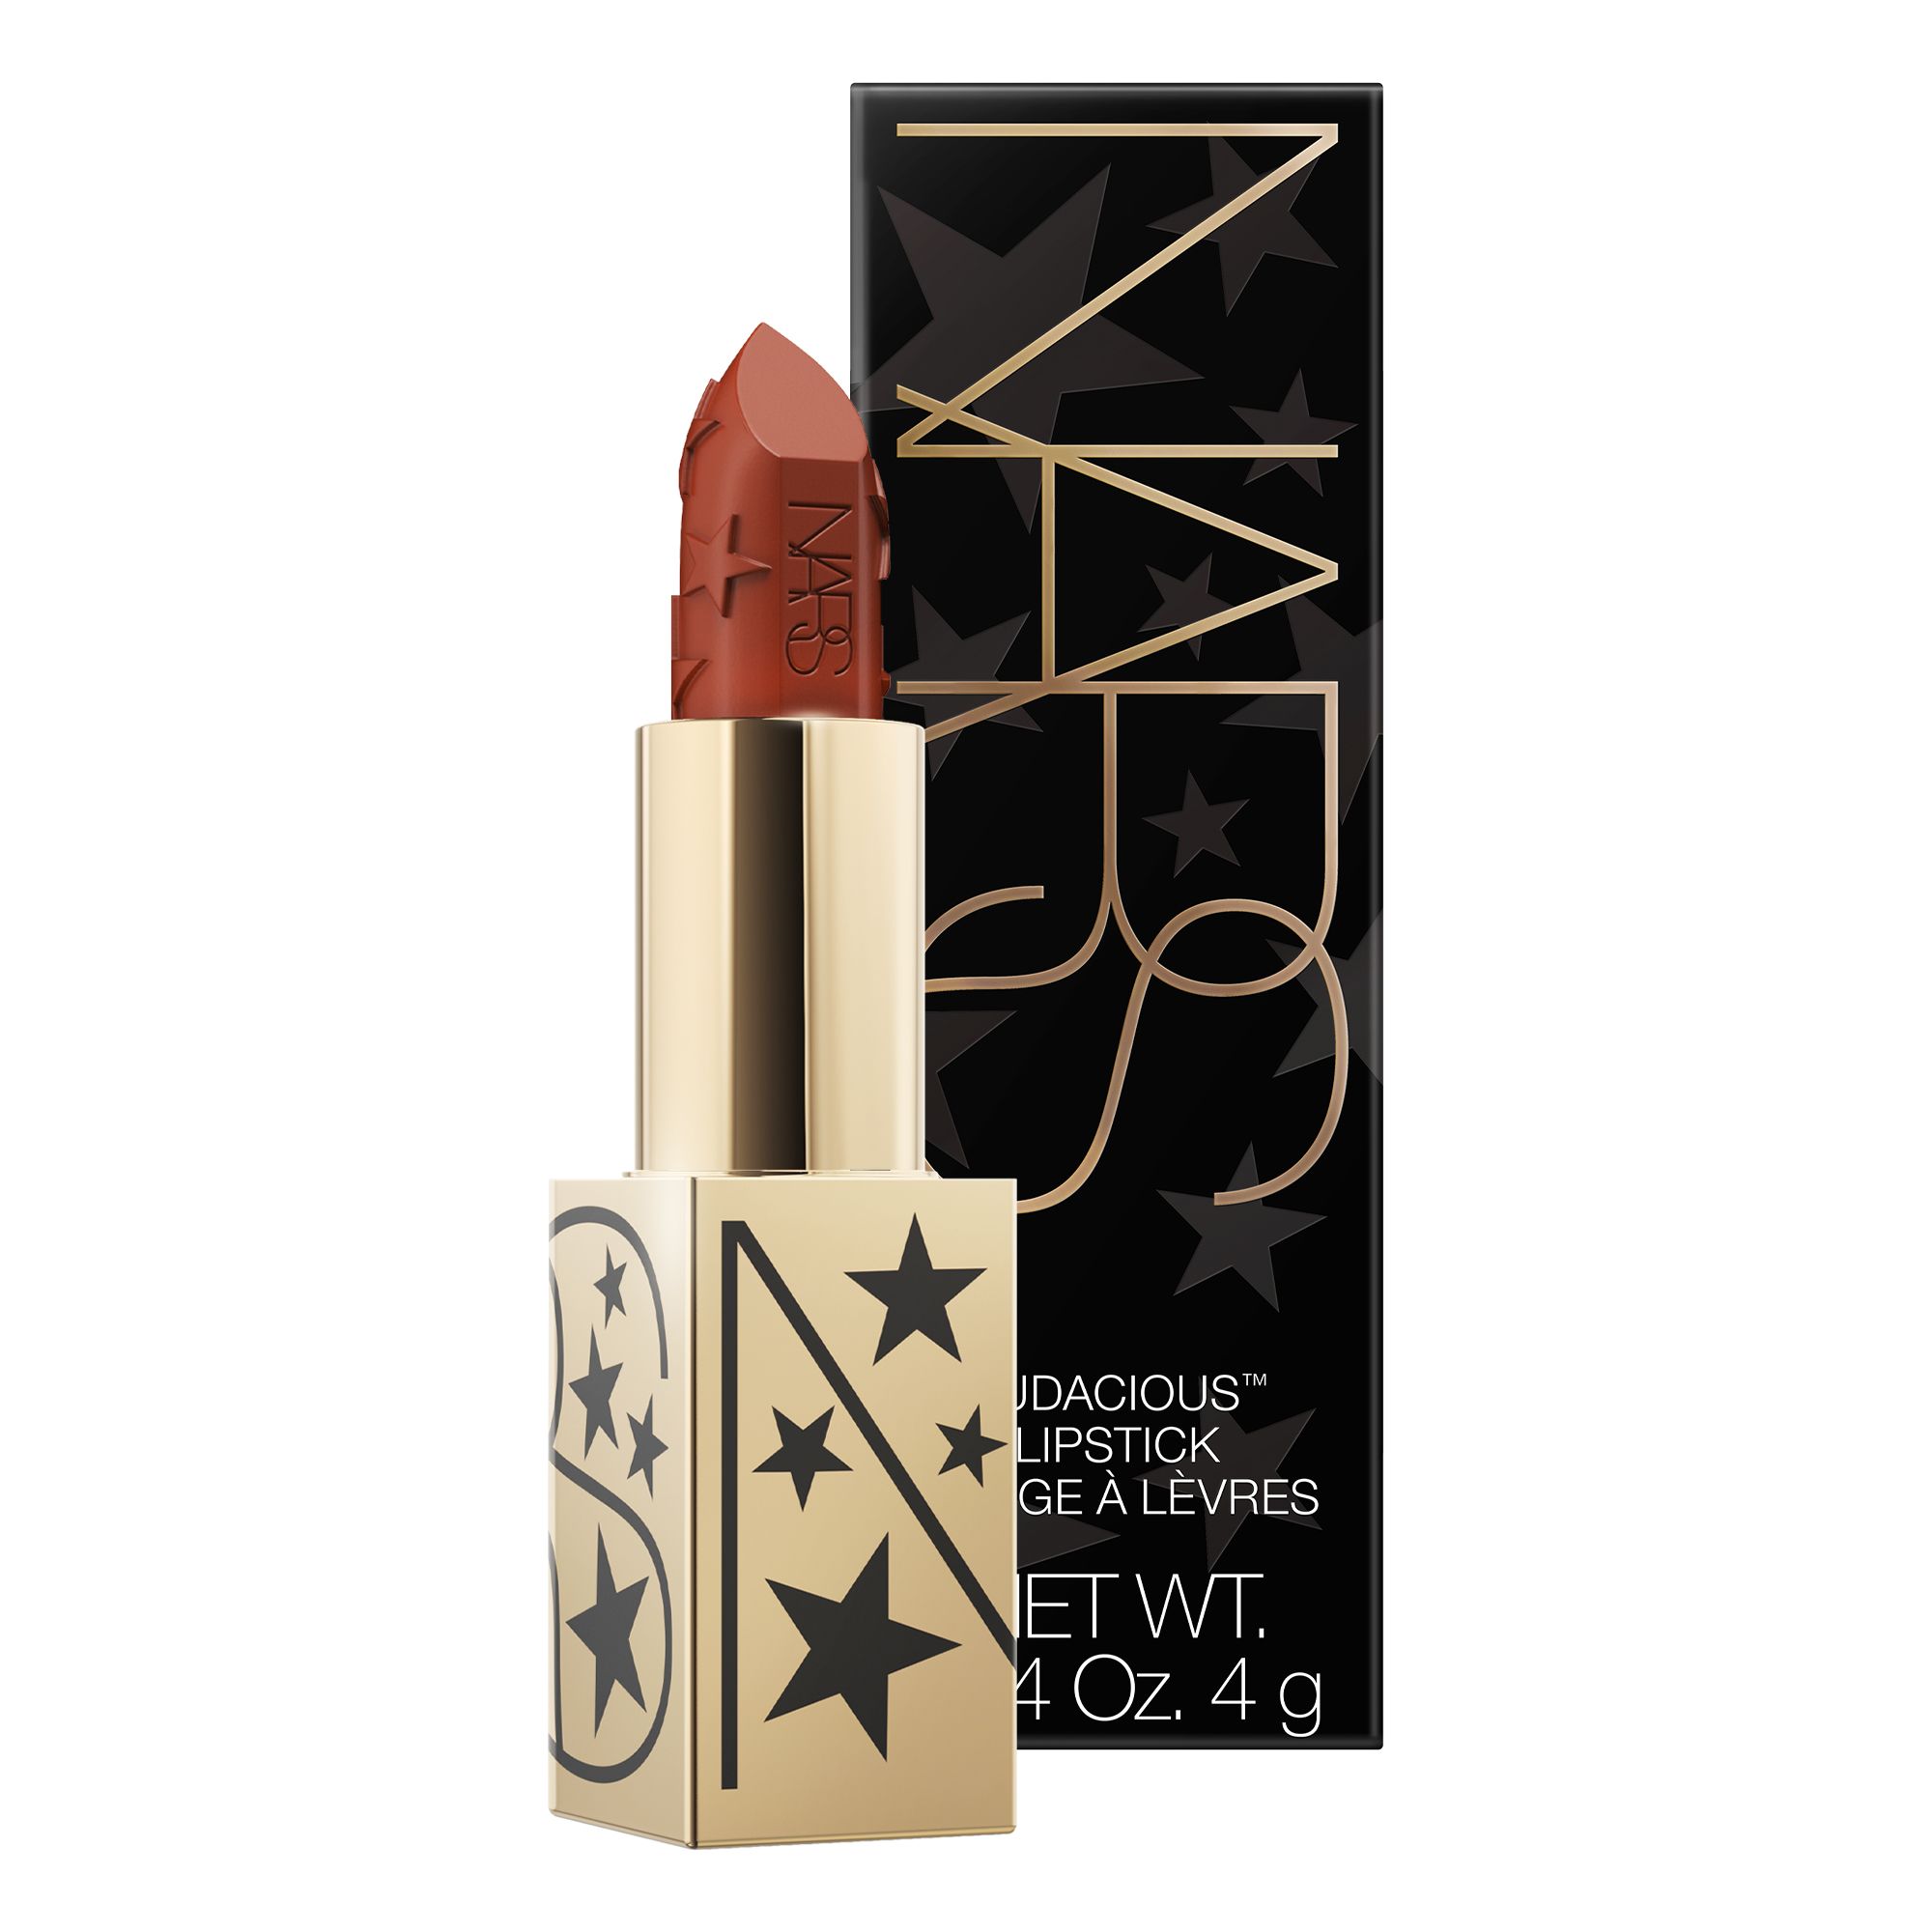 Starstruck Audacious Lipstick | NARS (US)